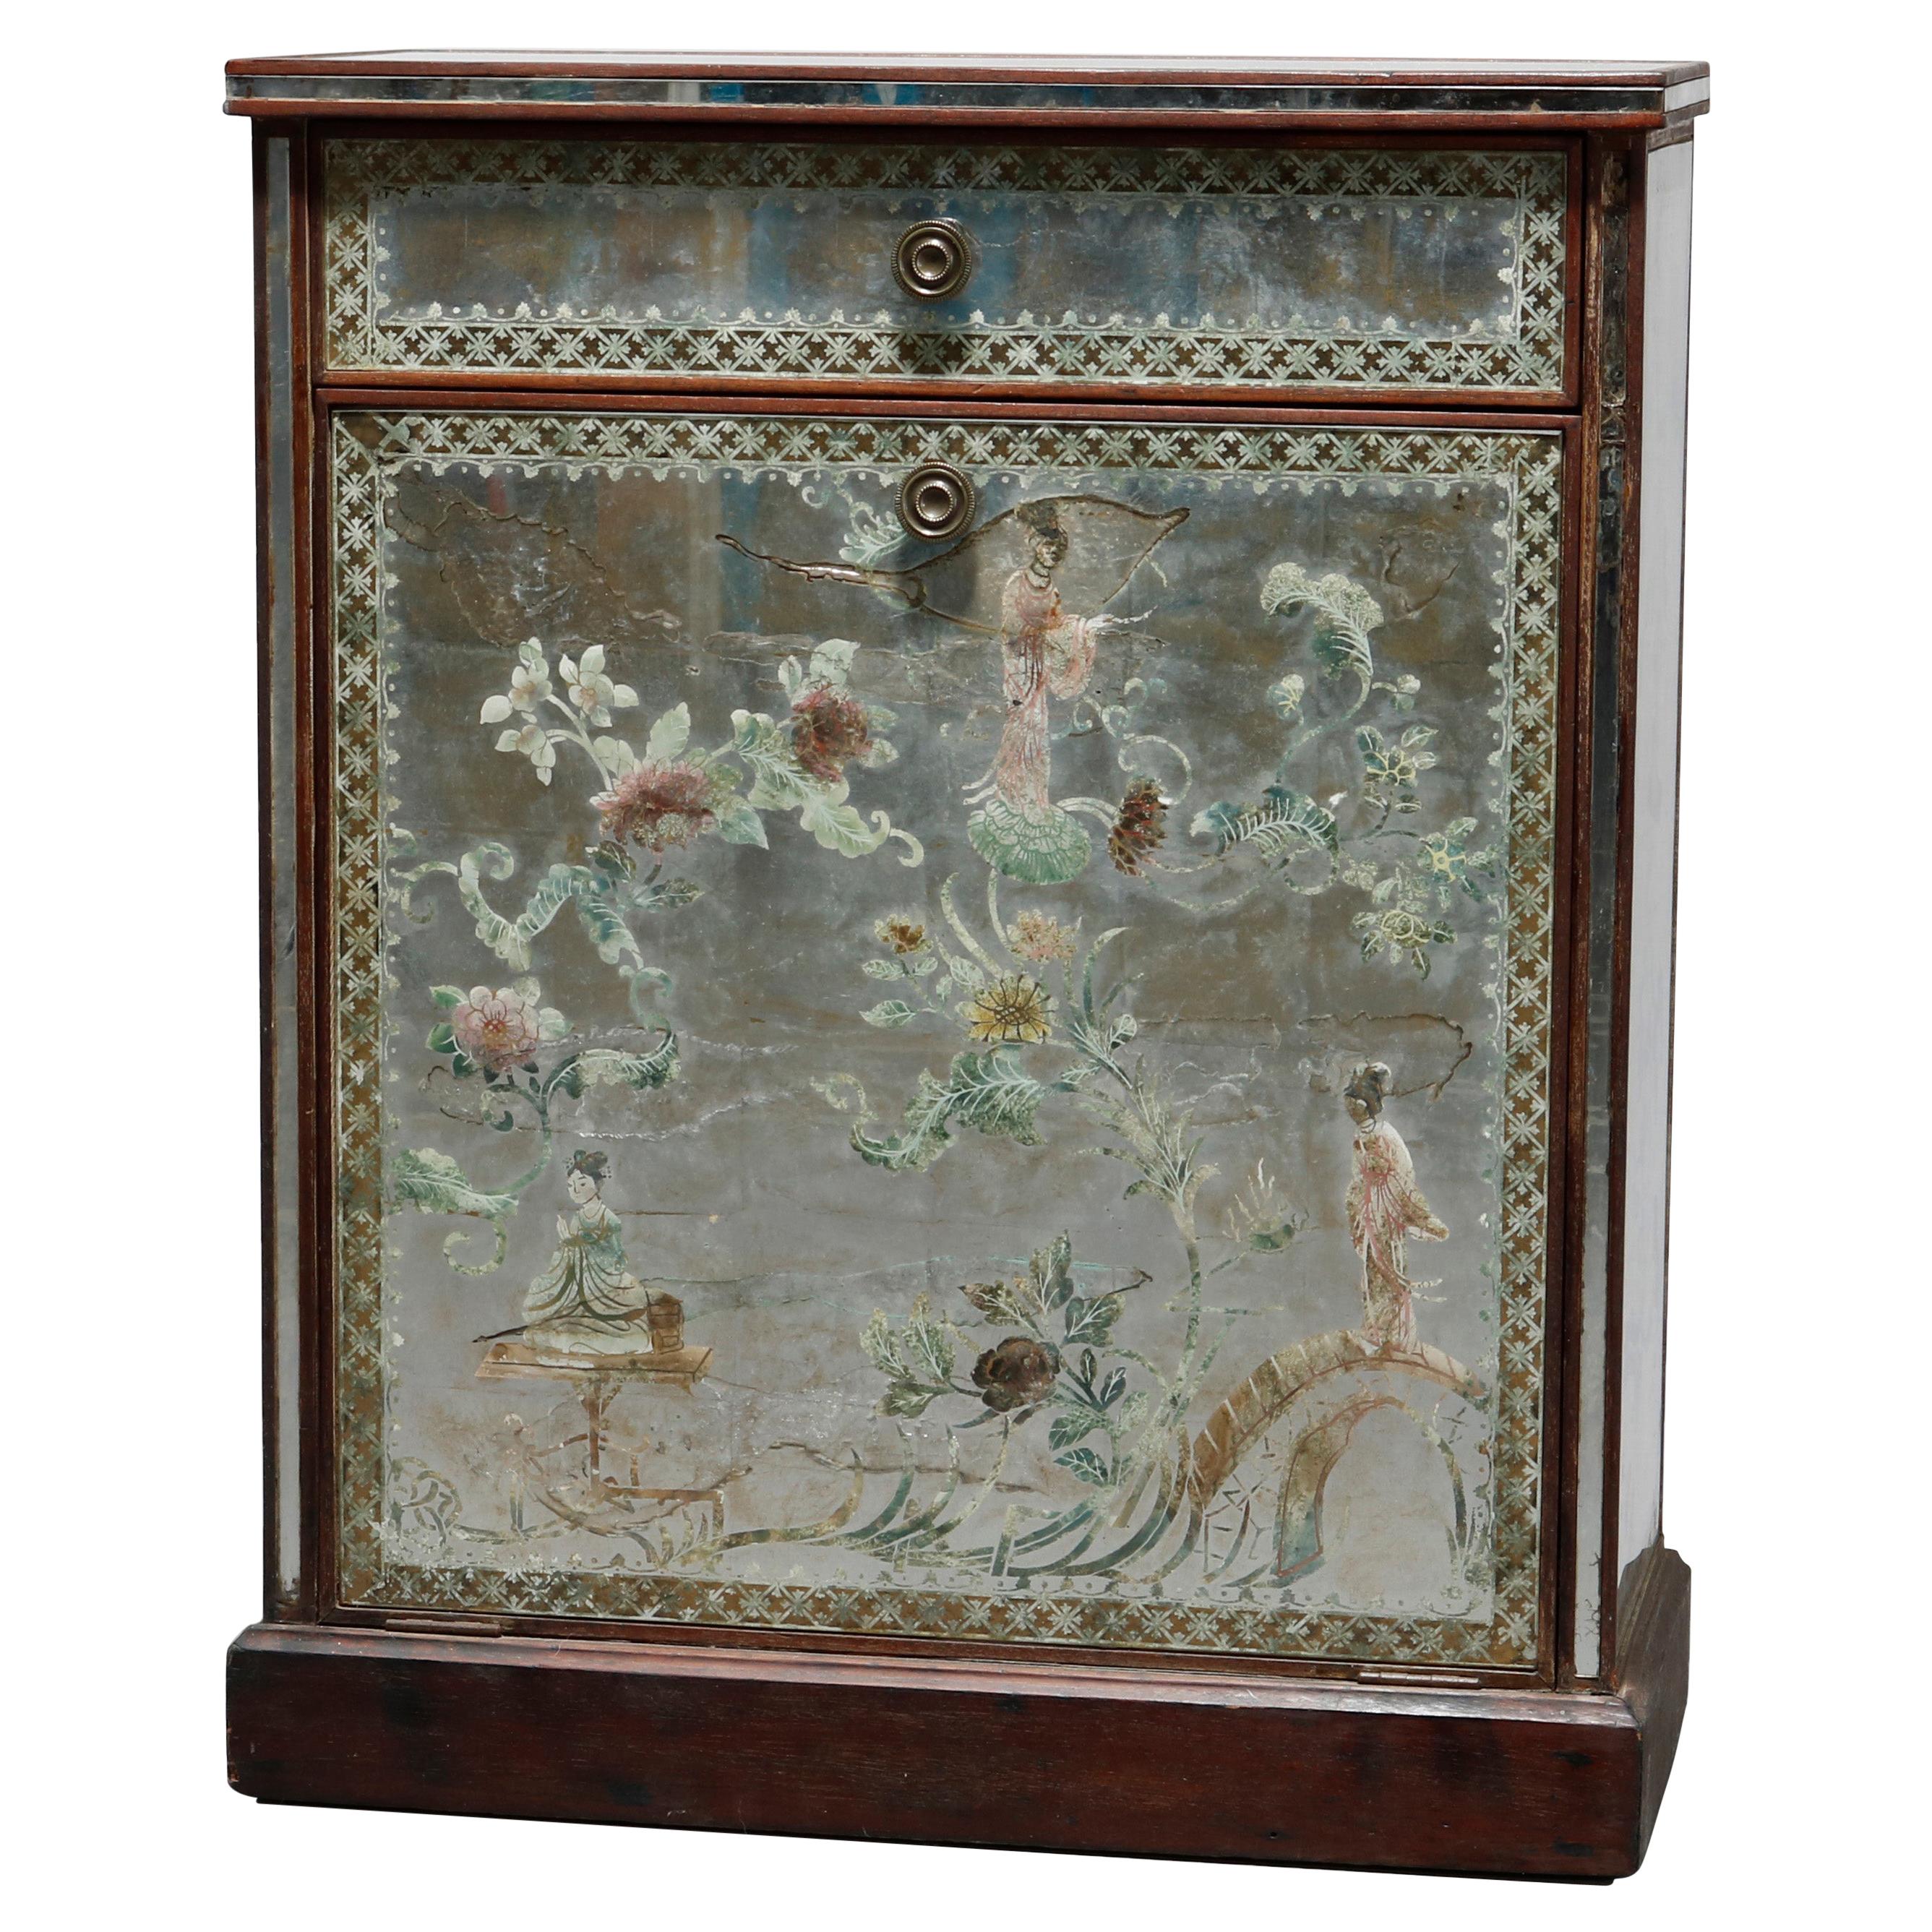 Antique Venetian Mirrored Chinoiserie Decorated Portfolio Stand, 20th C